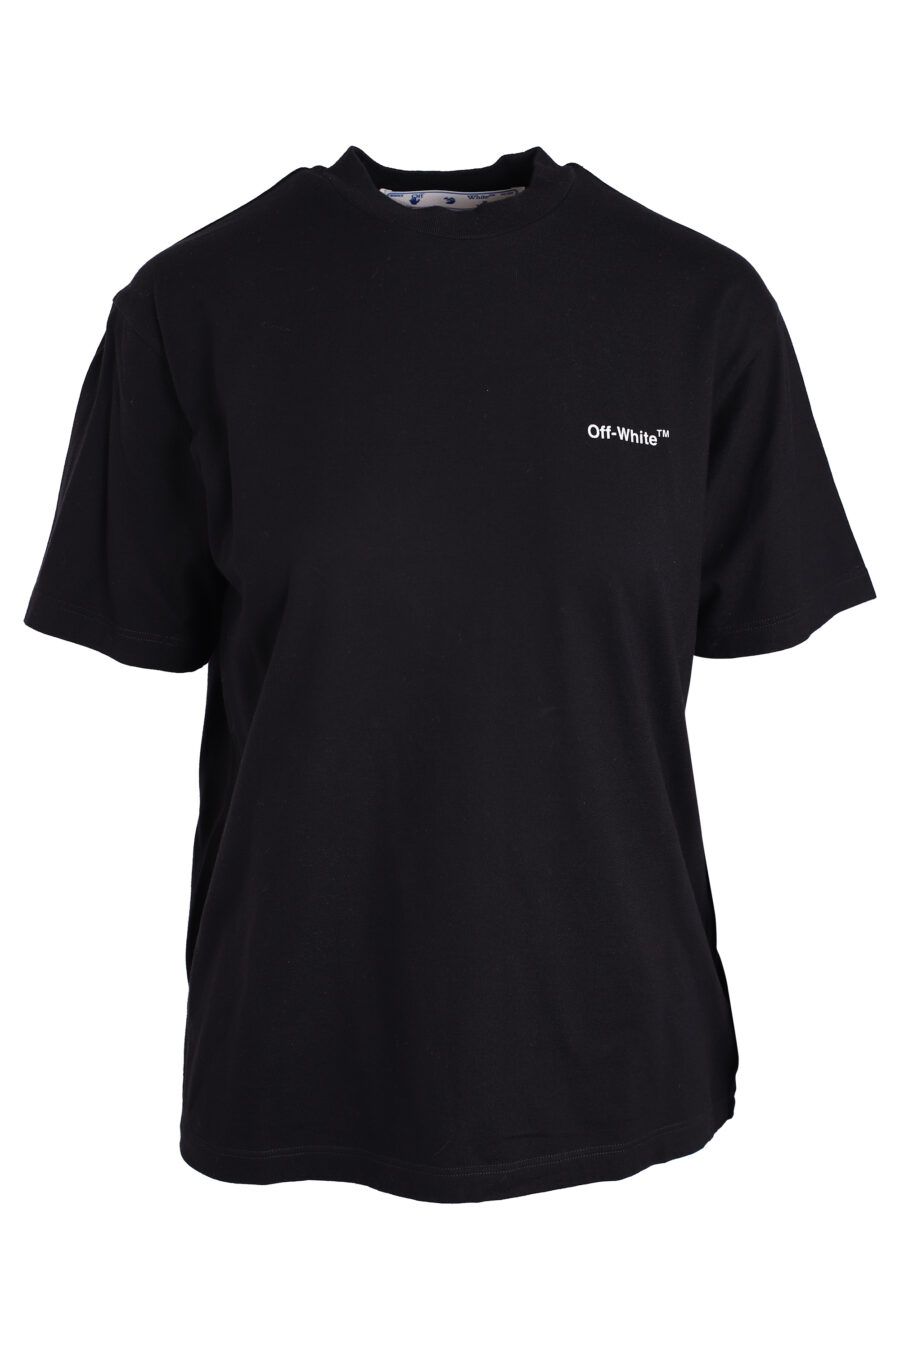 T-shirt noir avec logo "Diagonal regular" - IMG 3383